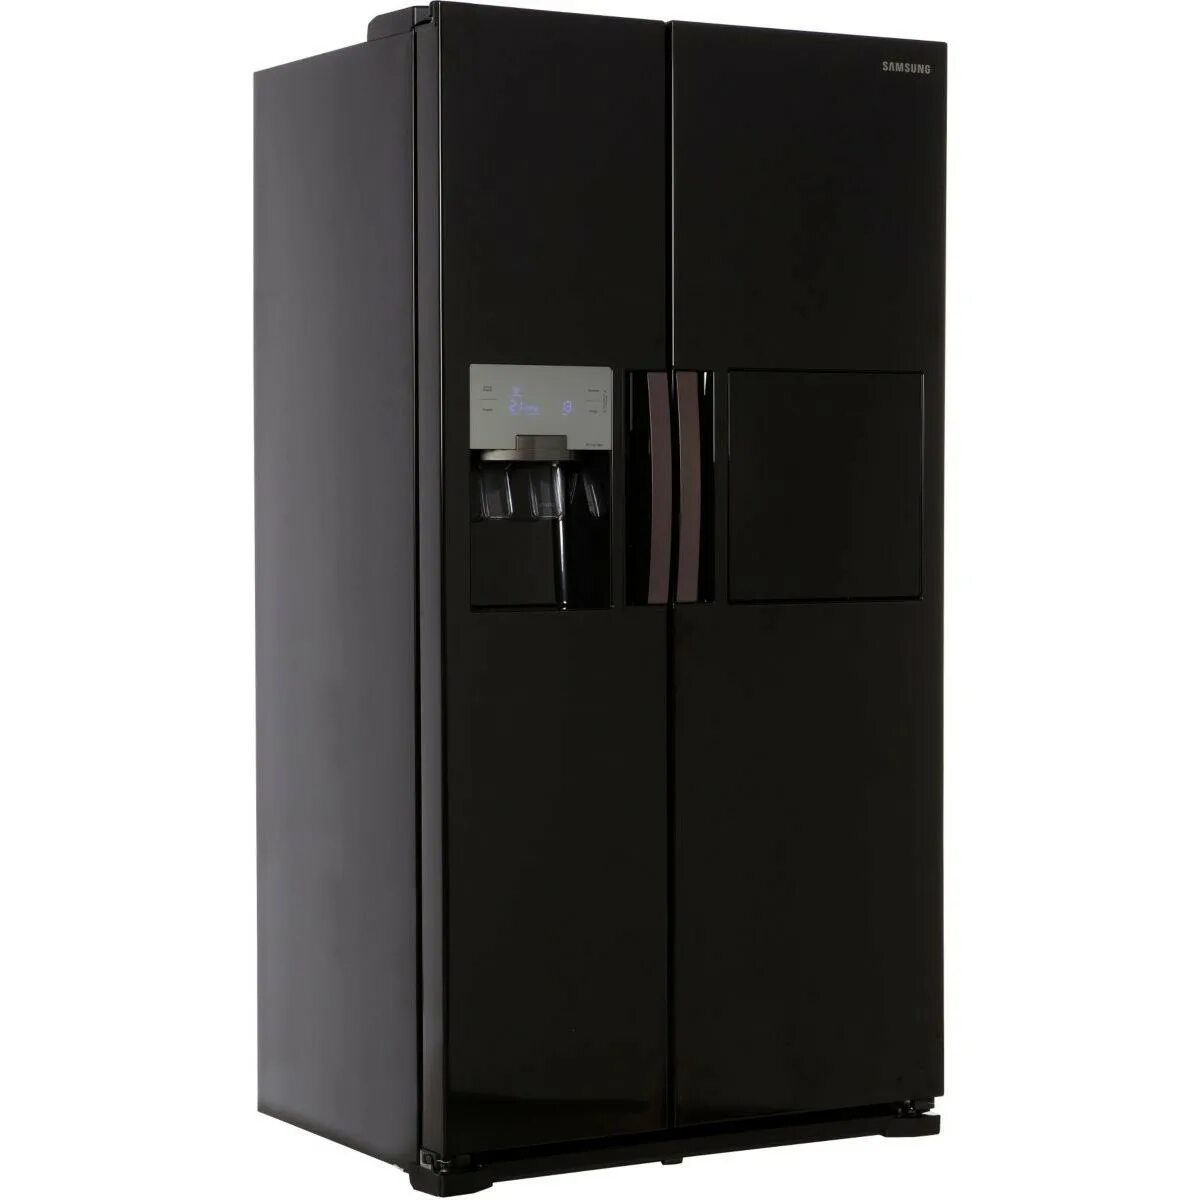 Холодильник Samsung RS-7687 FHCBC. Side by Side Samsung rs20nrps. Холодильник Samsung RS-7778 FHCWW. Холодильник Samsung rs50n3913bc, черный.